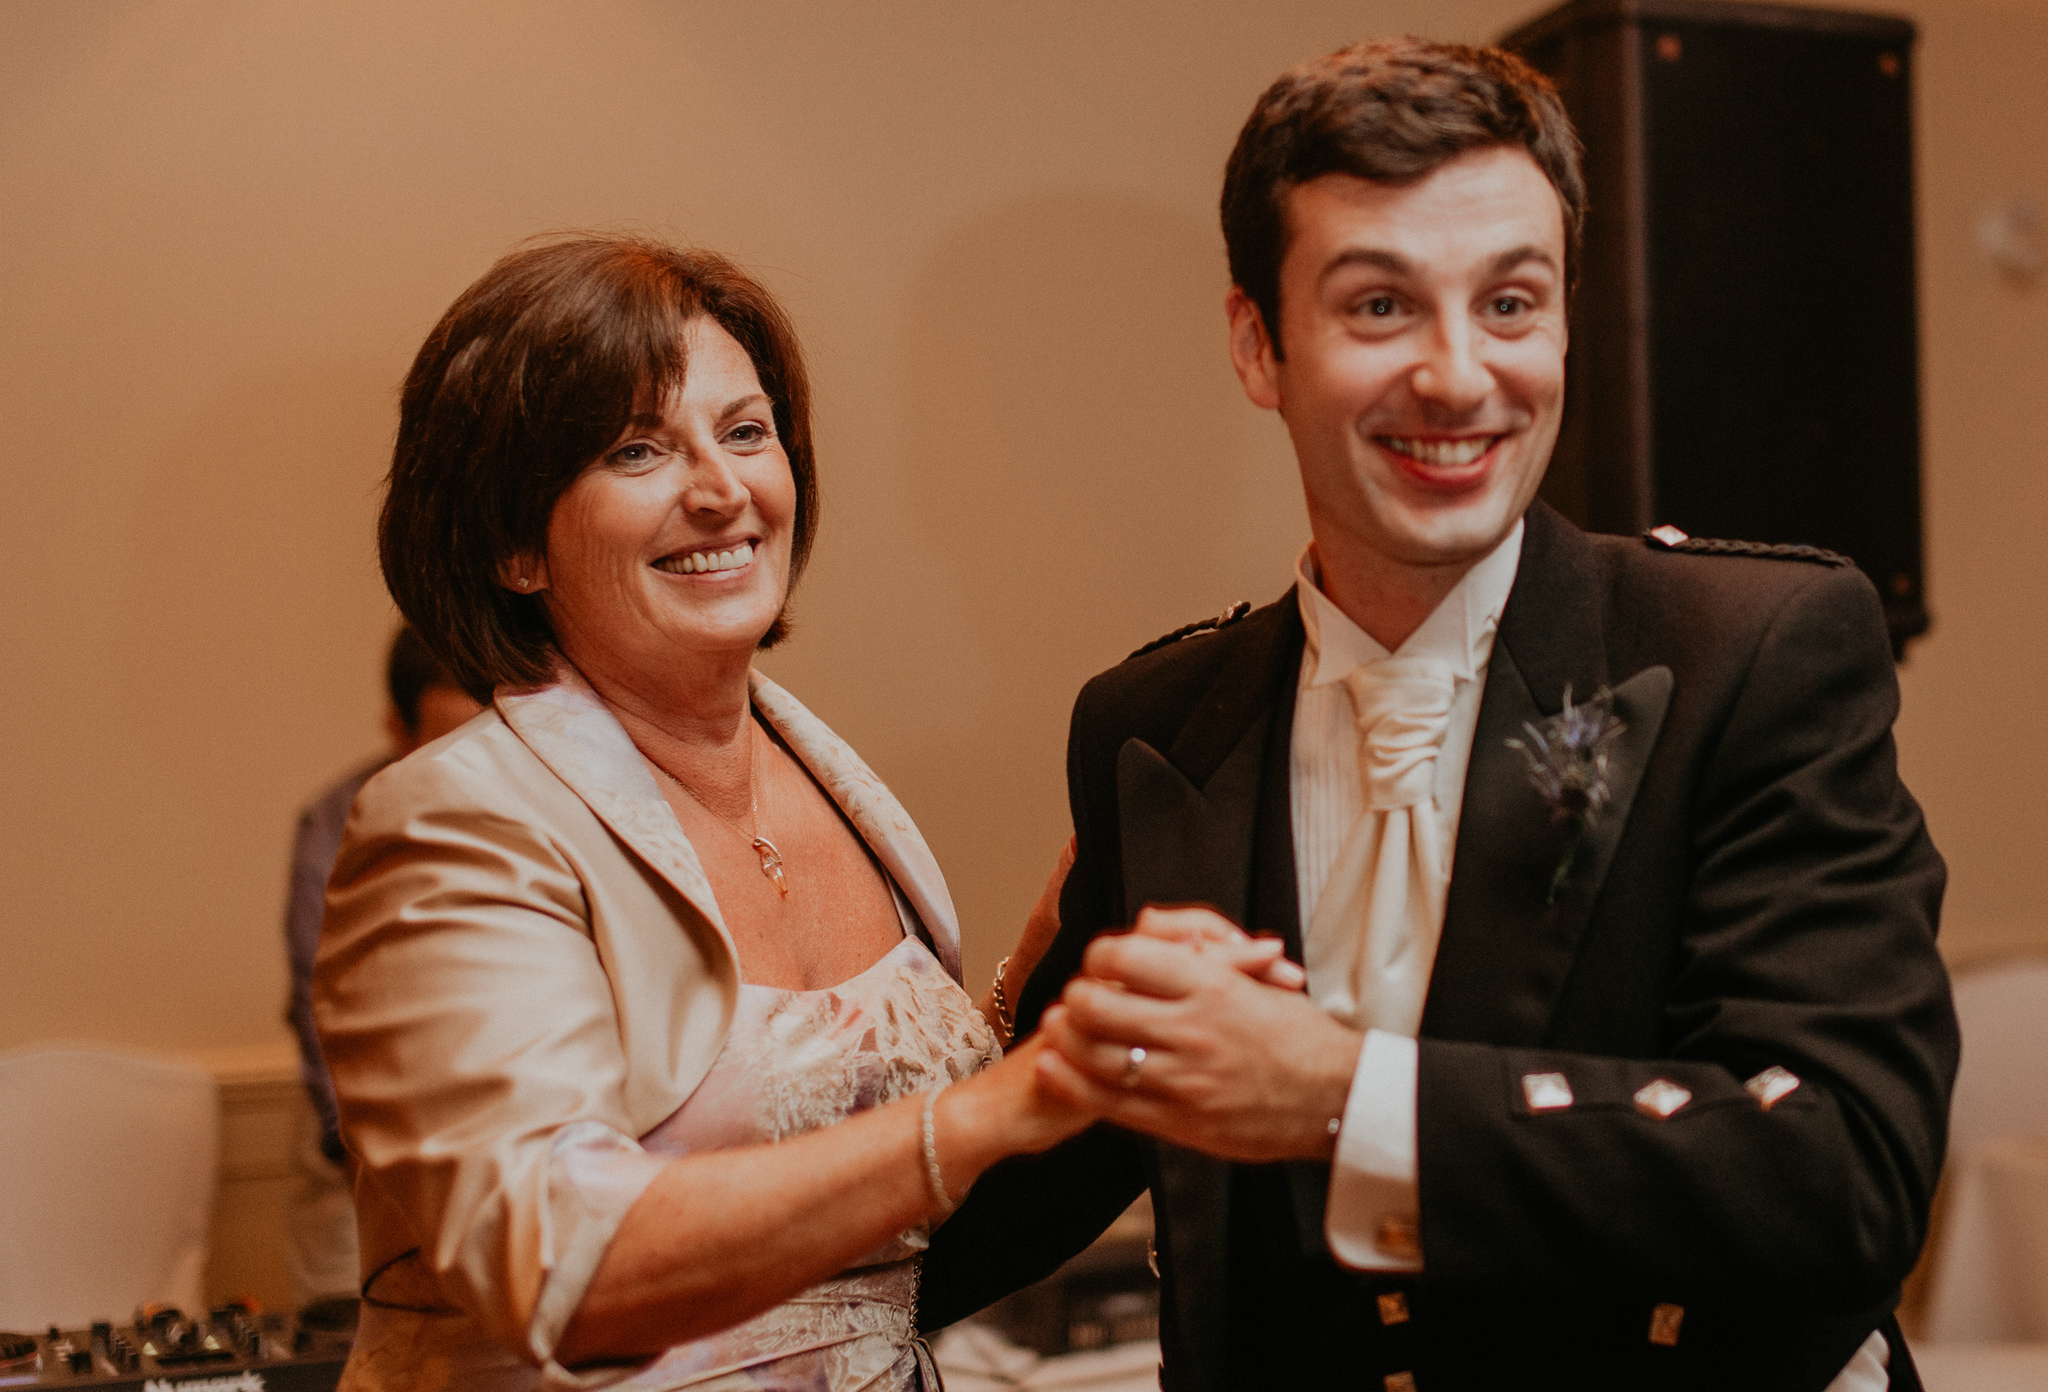 Groom dances with mom at wedding reception